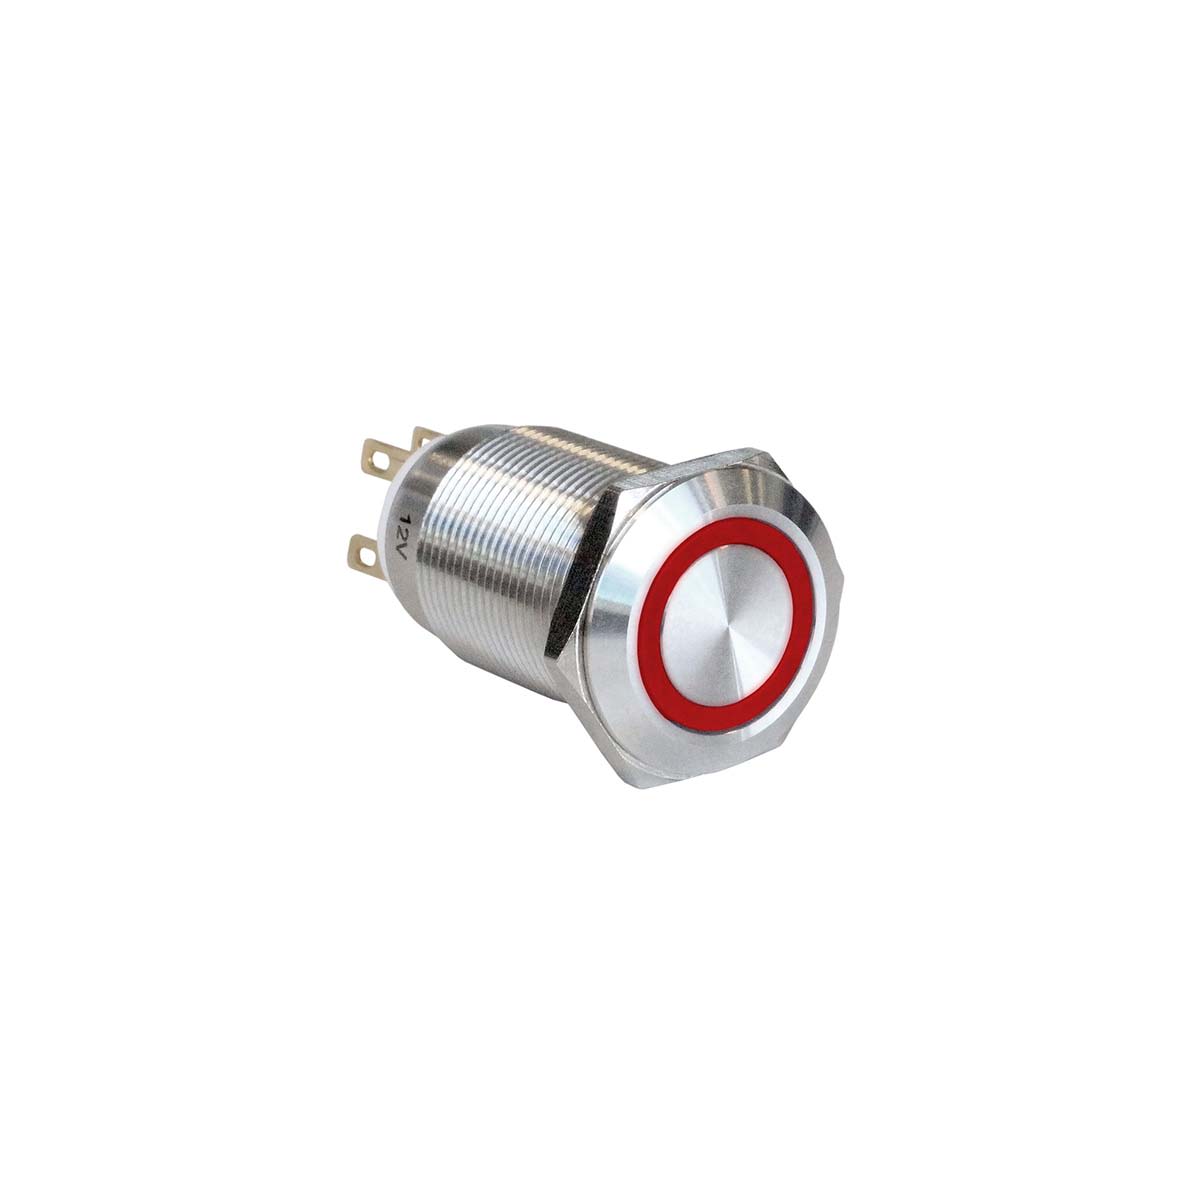 Bulgin Illuminated Latching Push Button Switch, Panel Mount, SPST, Red LED, 12V, IP65